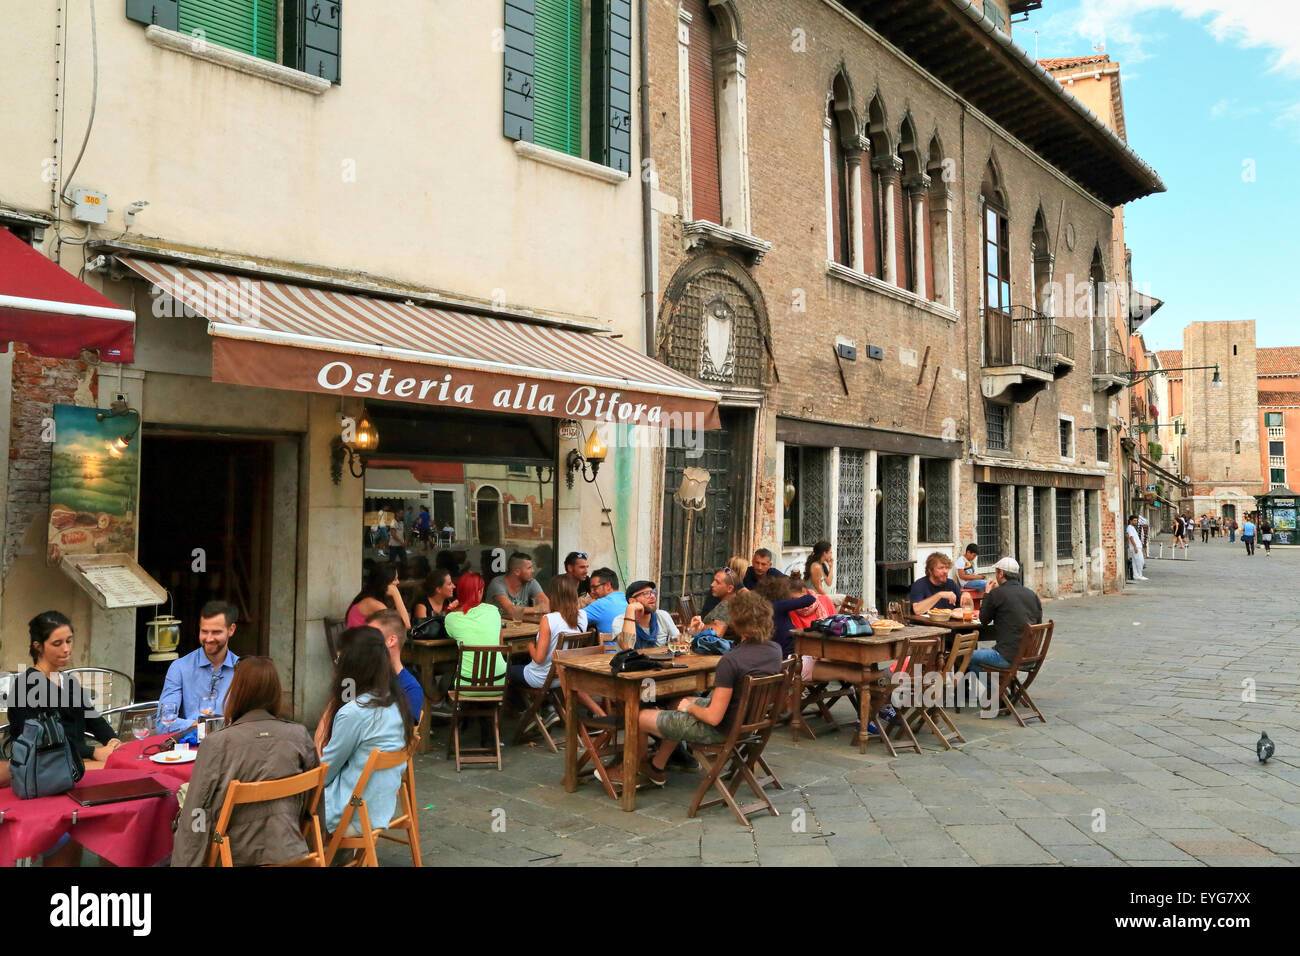 Osteria alla Bifora - Italian cafe bar restaurant at campo Santa Margherita, Venice, Italy Stock Photo